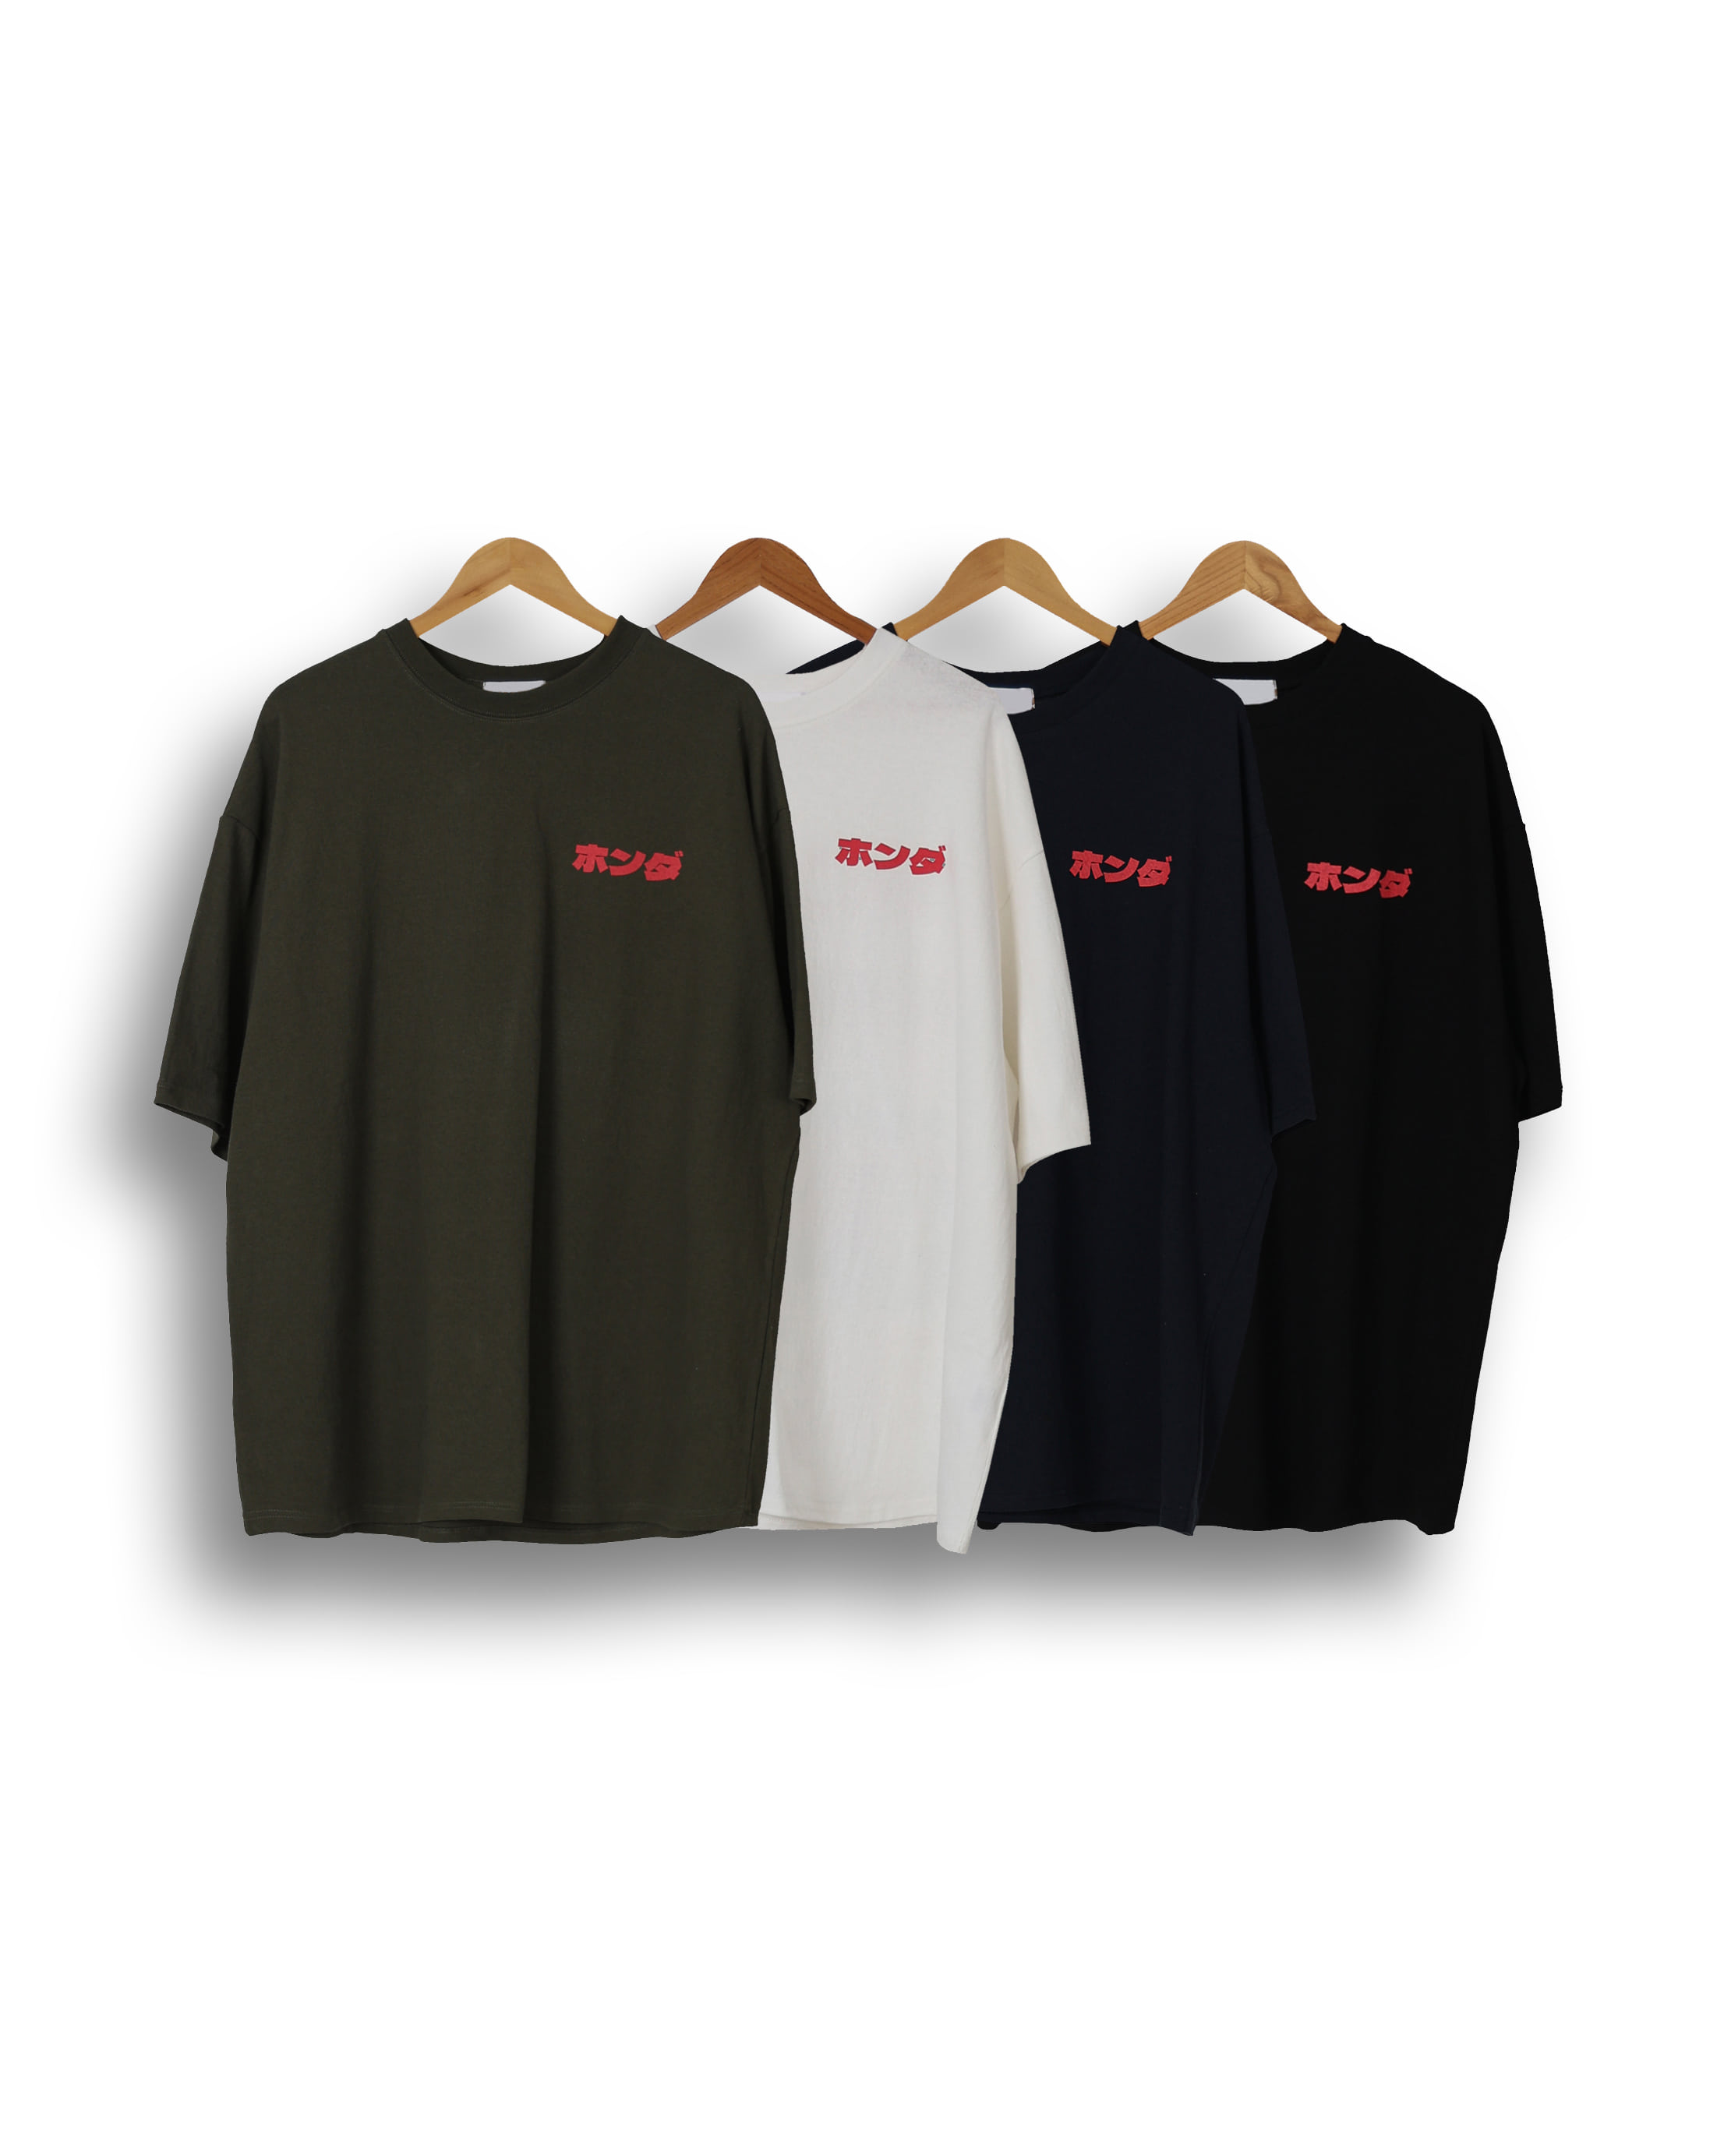 KIRI Hiragana Over Printed T Shirts (Black/Navy/Khaki/Ivory)